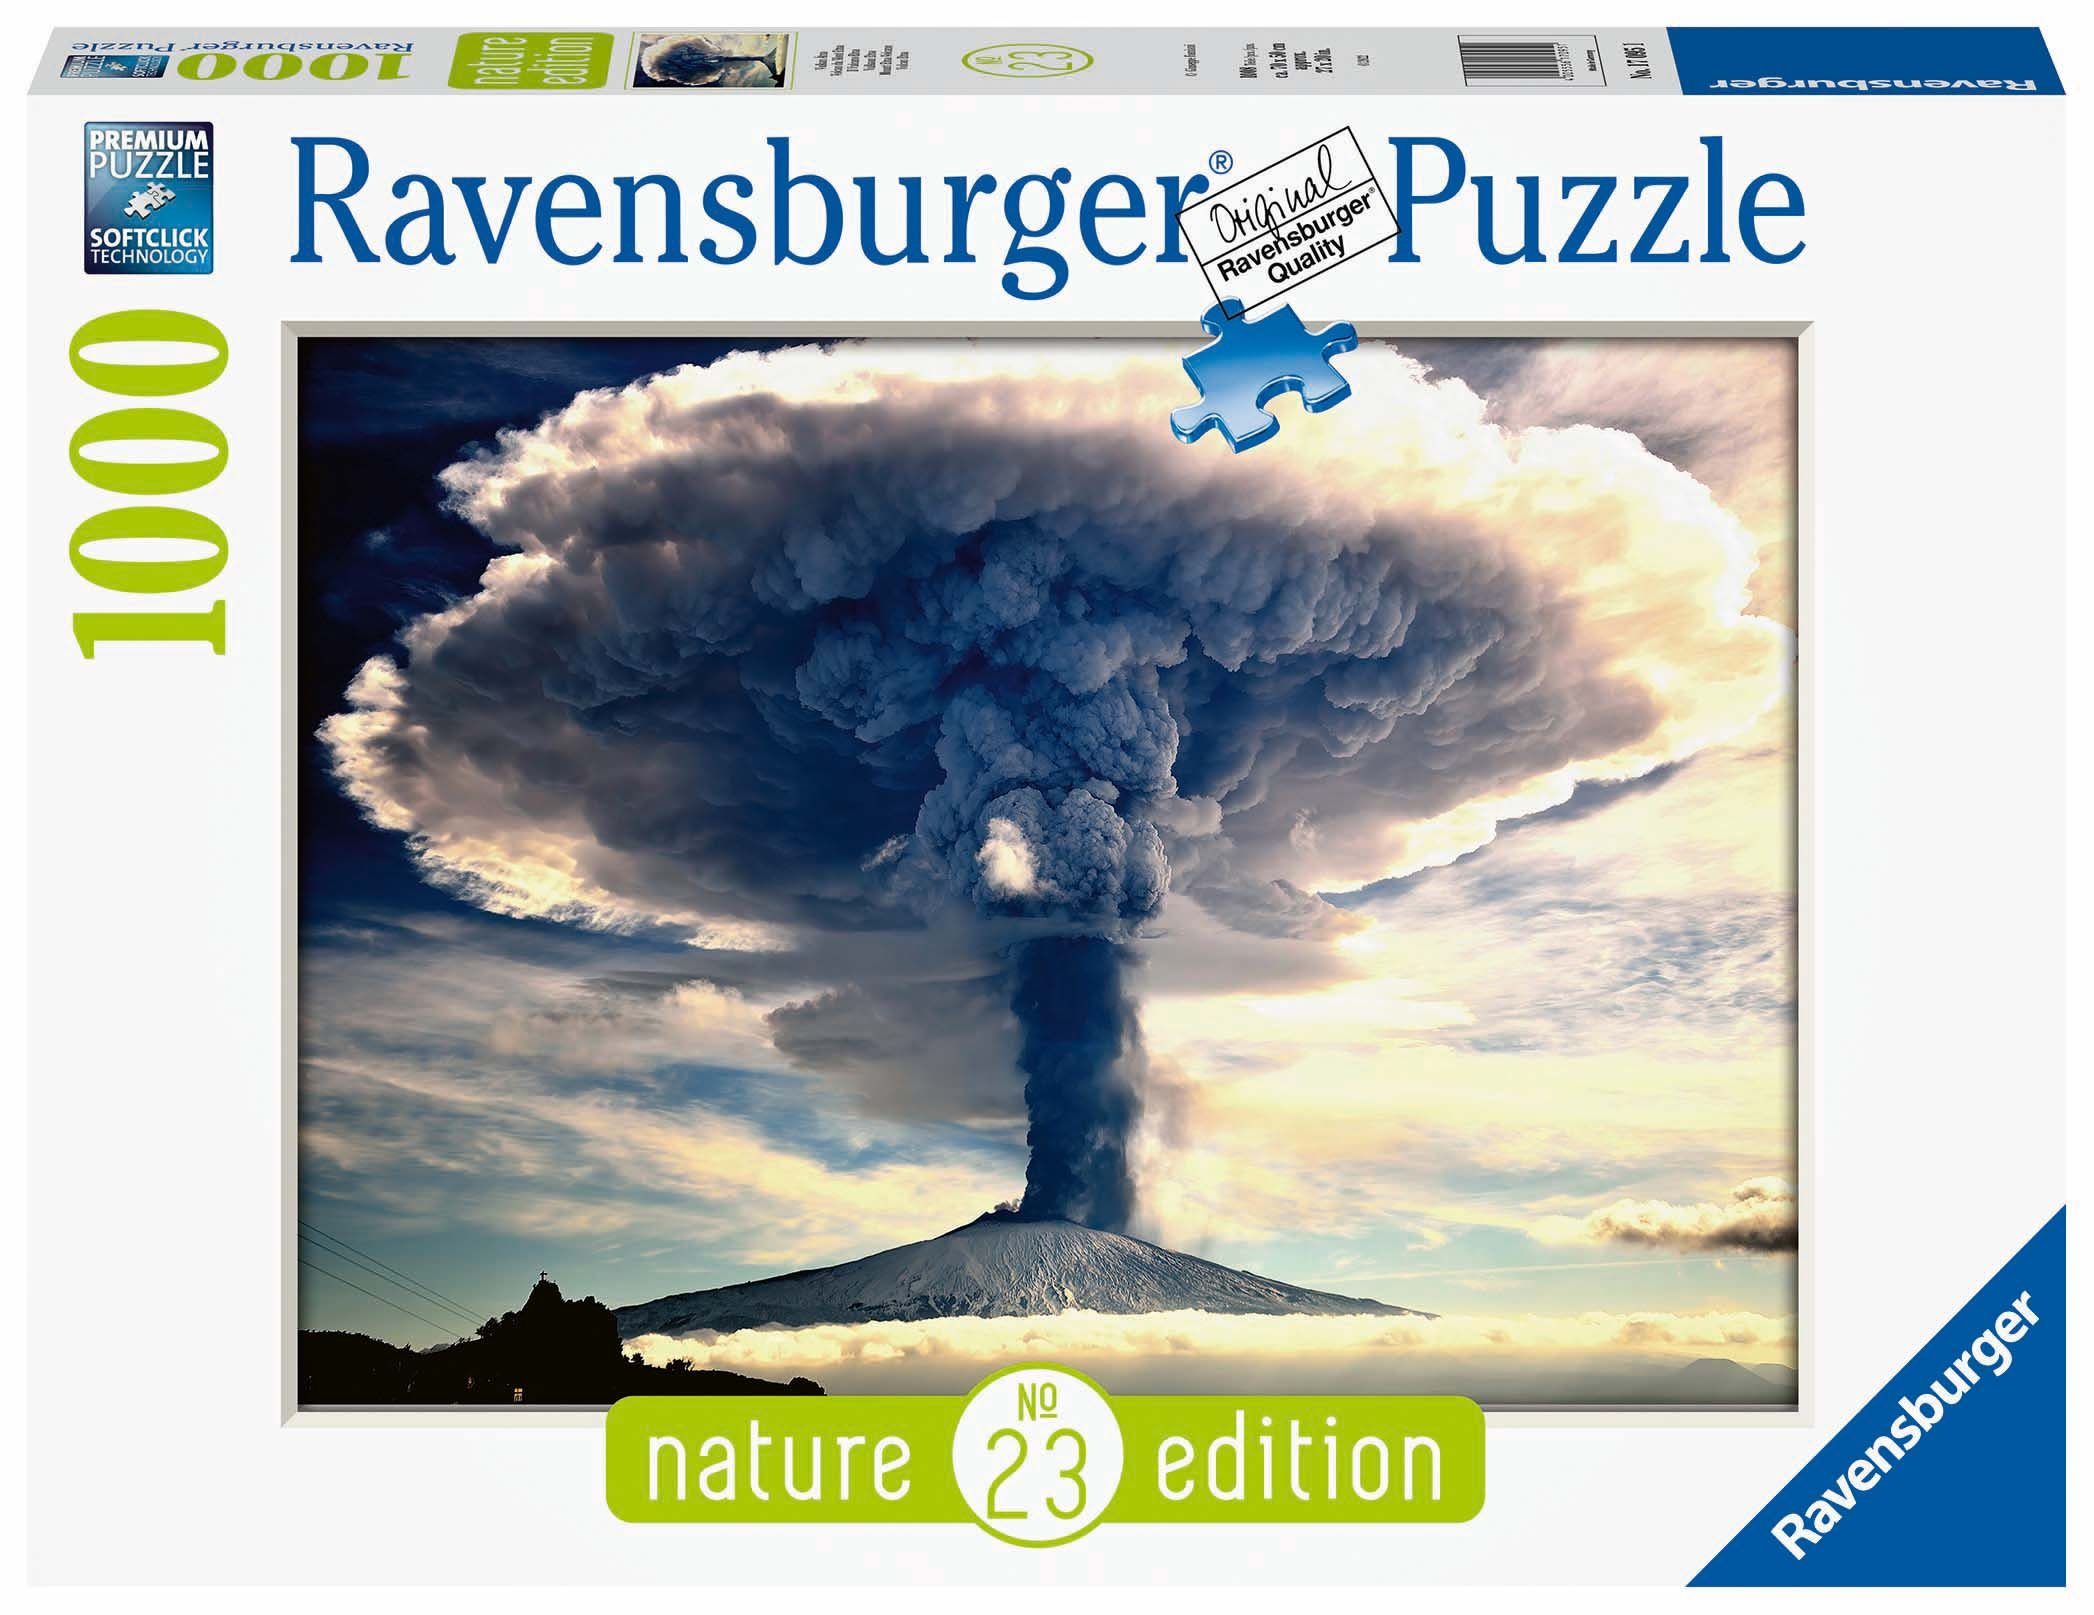 Ravensburger Puzzle Vulkan Ätna, 1000 Puzzleteile, Made in Germany, FSC® - schützt Wald - weltweit